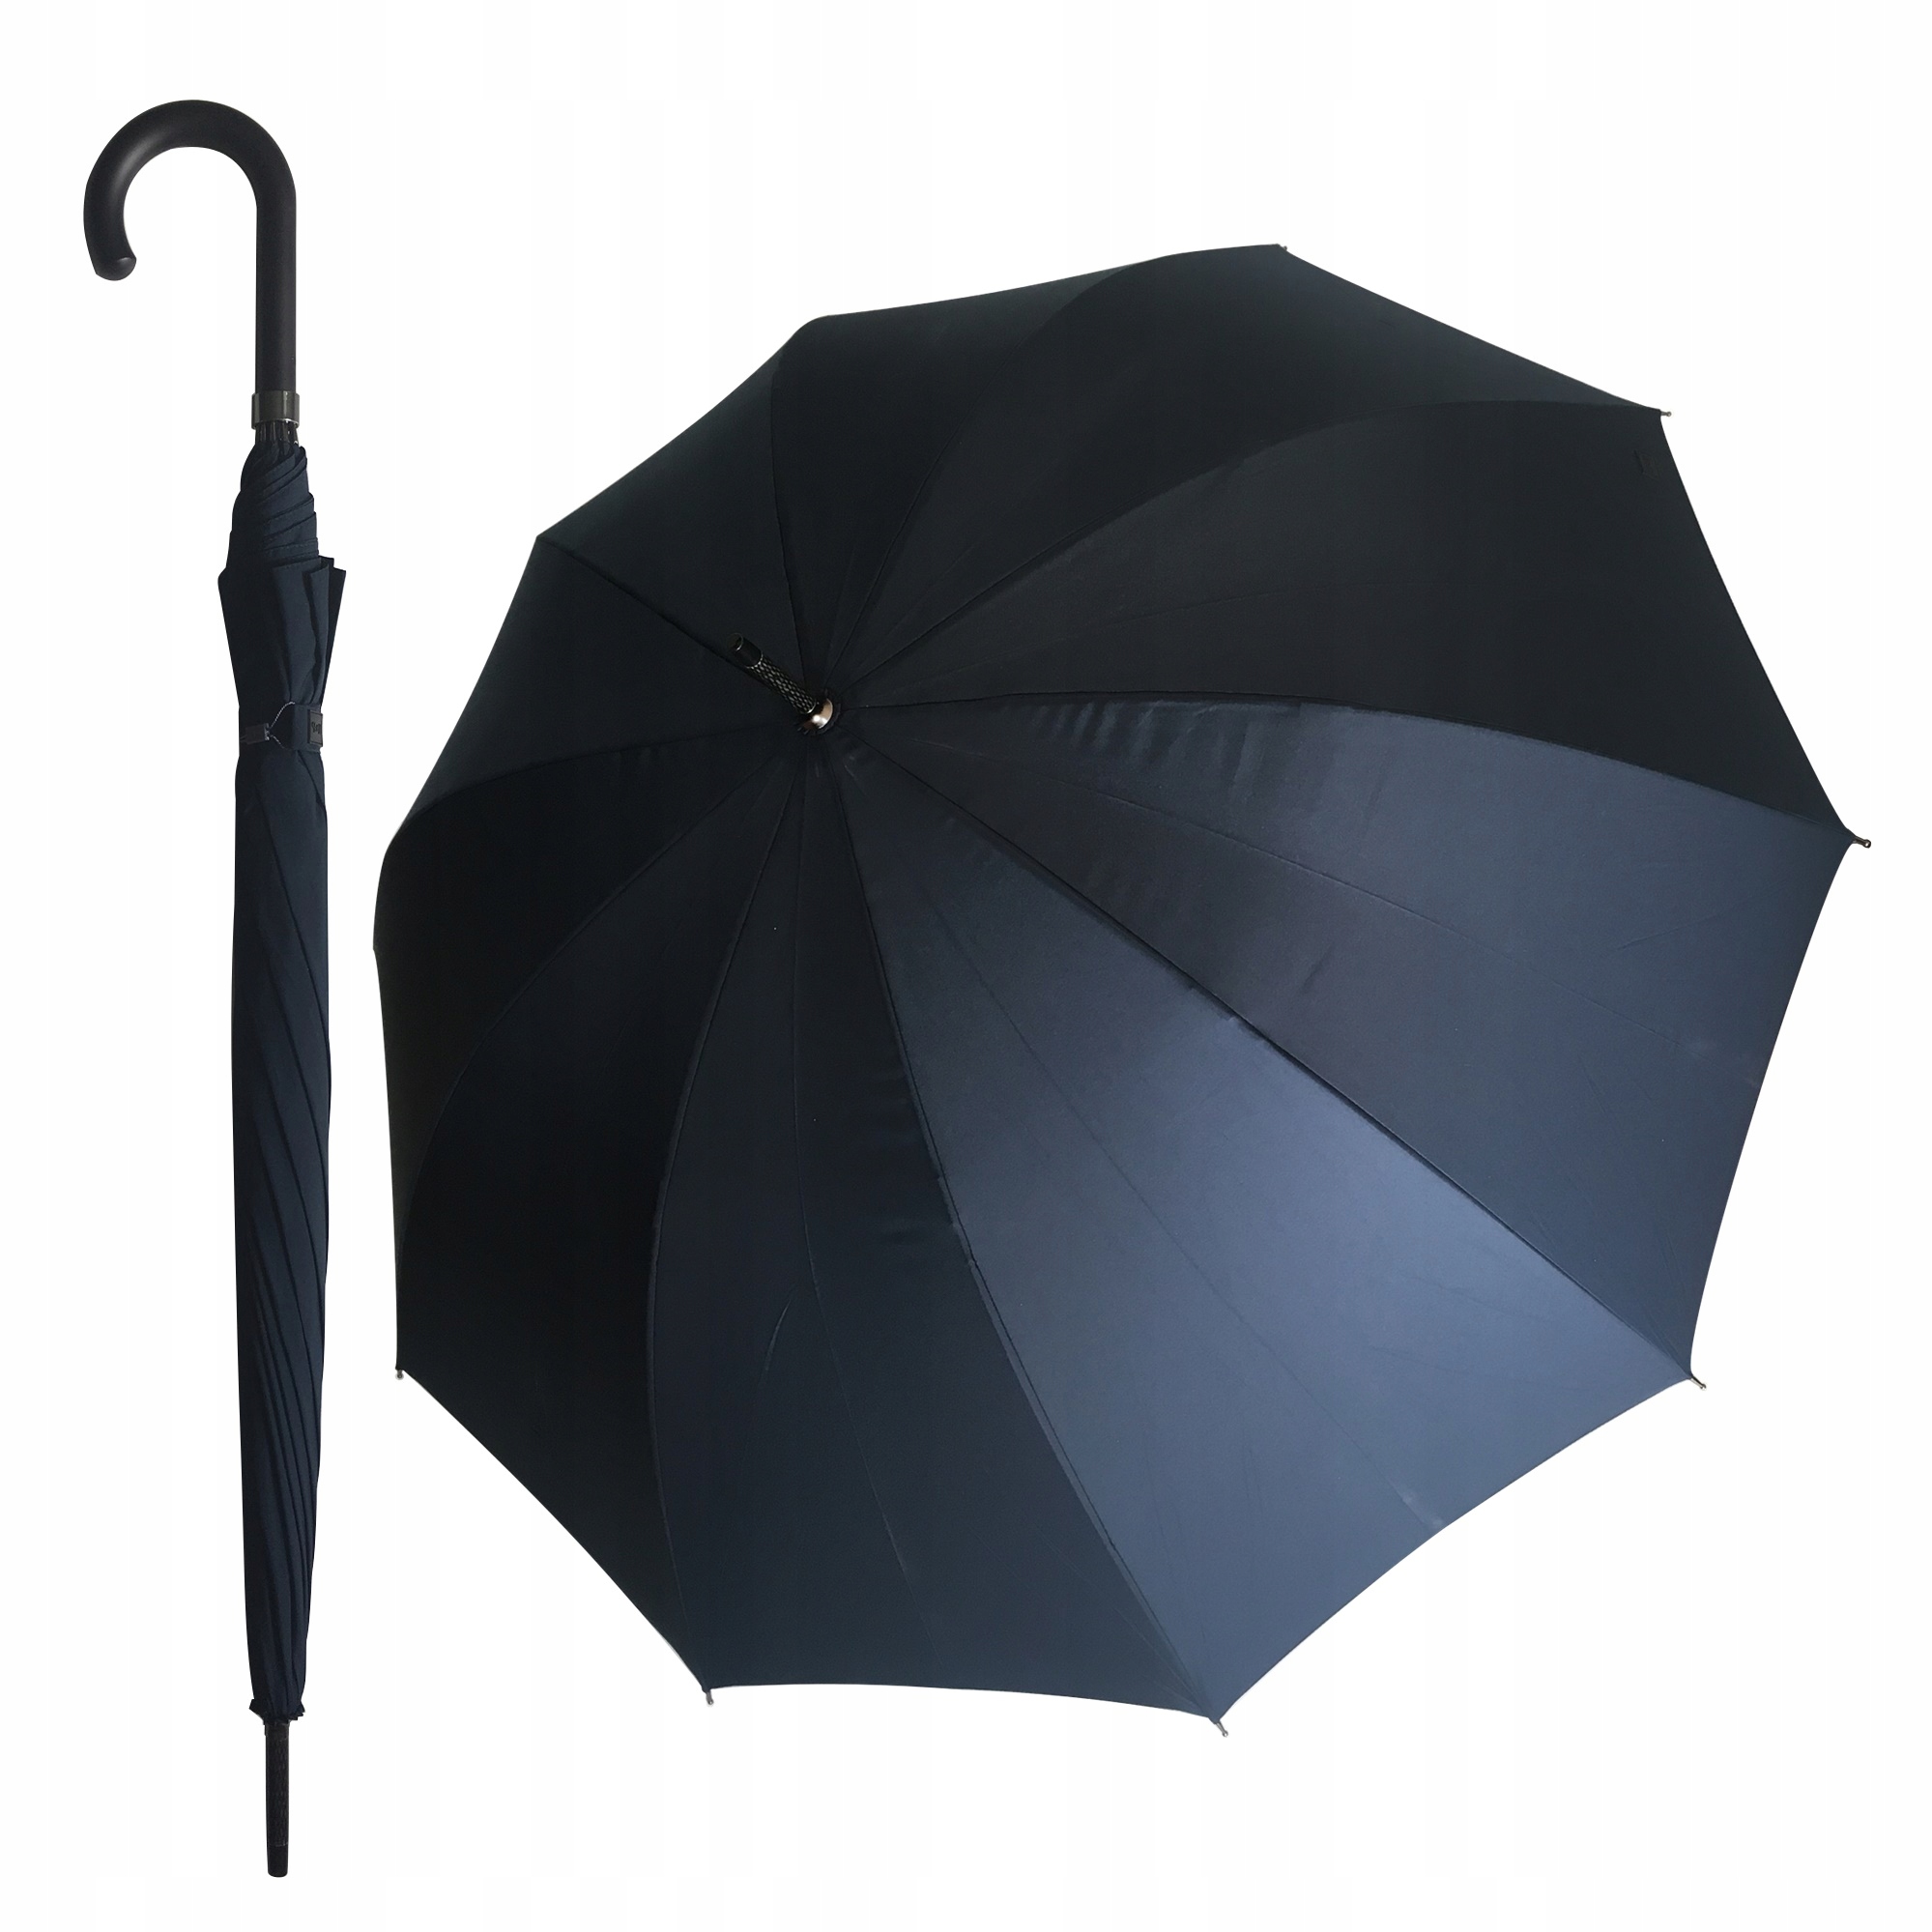 Длинный зонтик. Зонт ternua Venice. Длинный зонт. Огромный зонт. Зонт большой мужской.